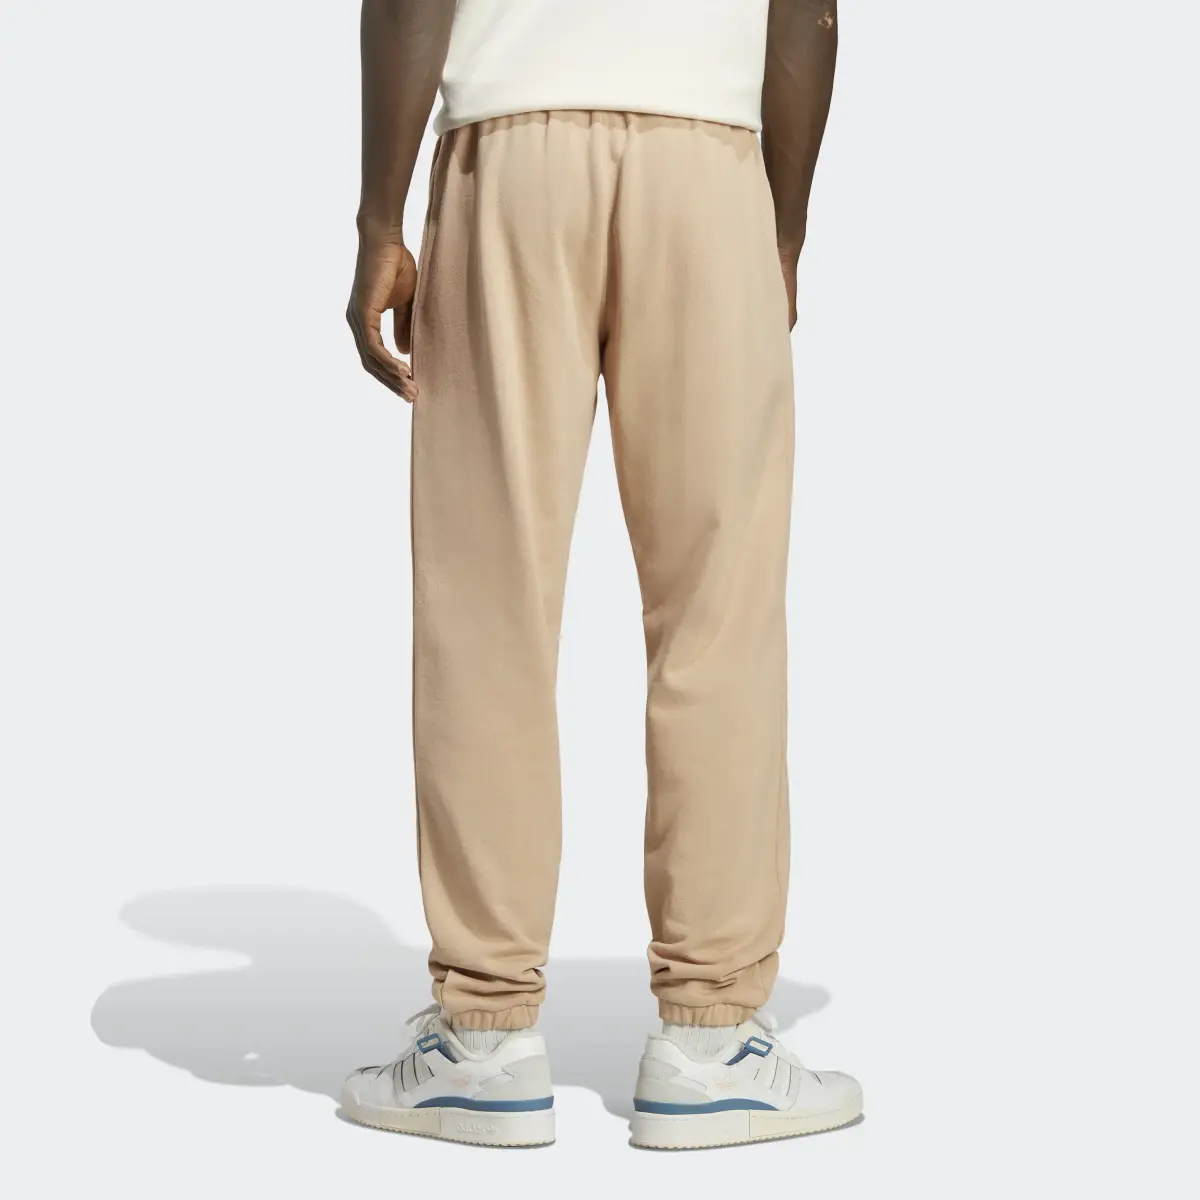 Adidas RIFTA City Boy Essential Sweat Pants. 2